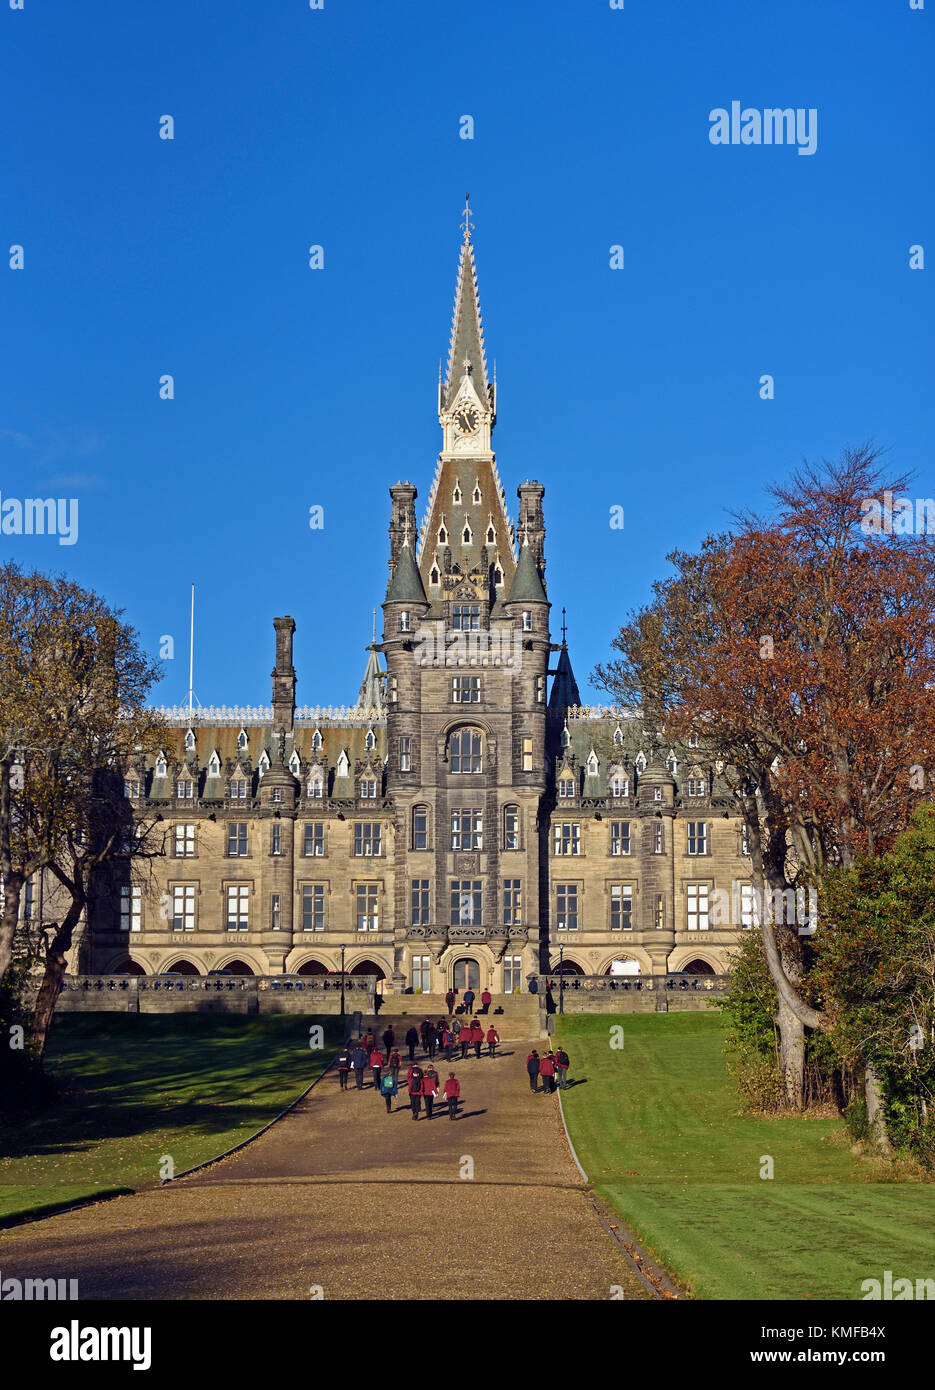 Students approaching Fettes College, Carrington Road, Edinburgh, Scotland, United Kingdom, Europe. Stock Photo